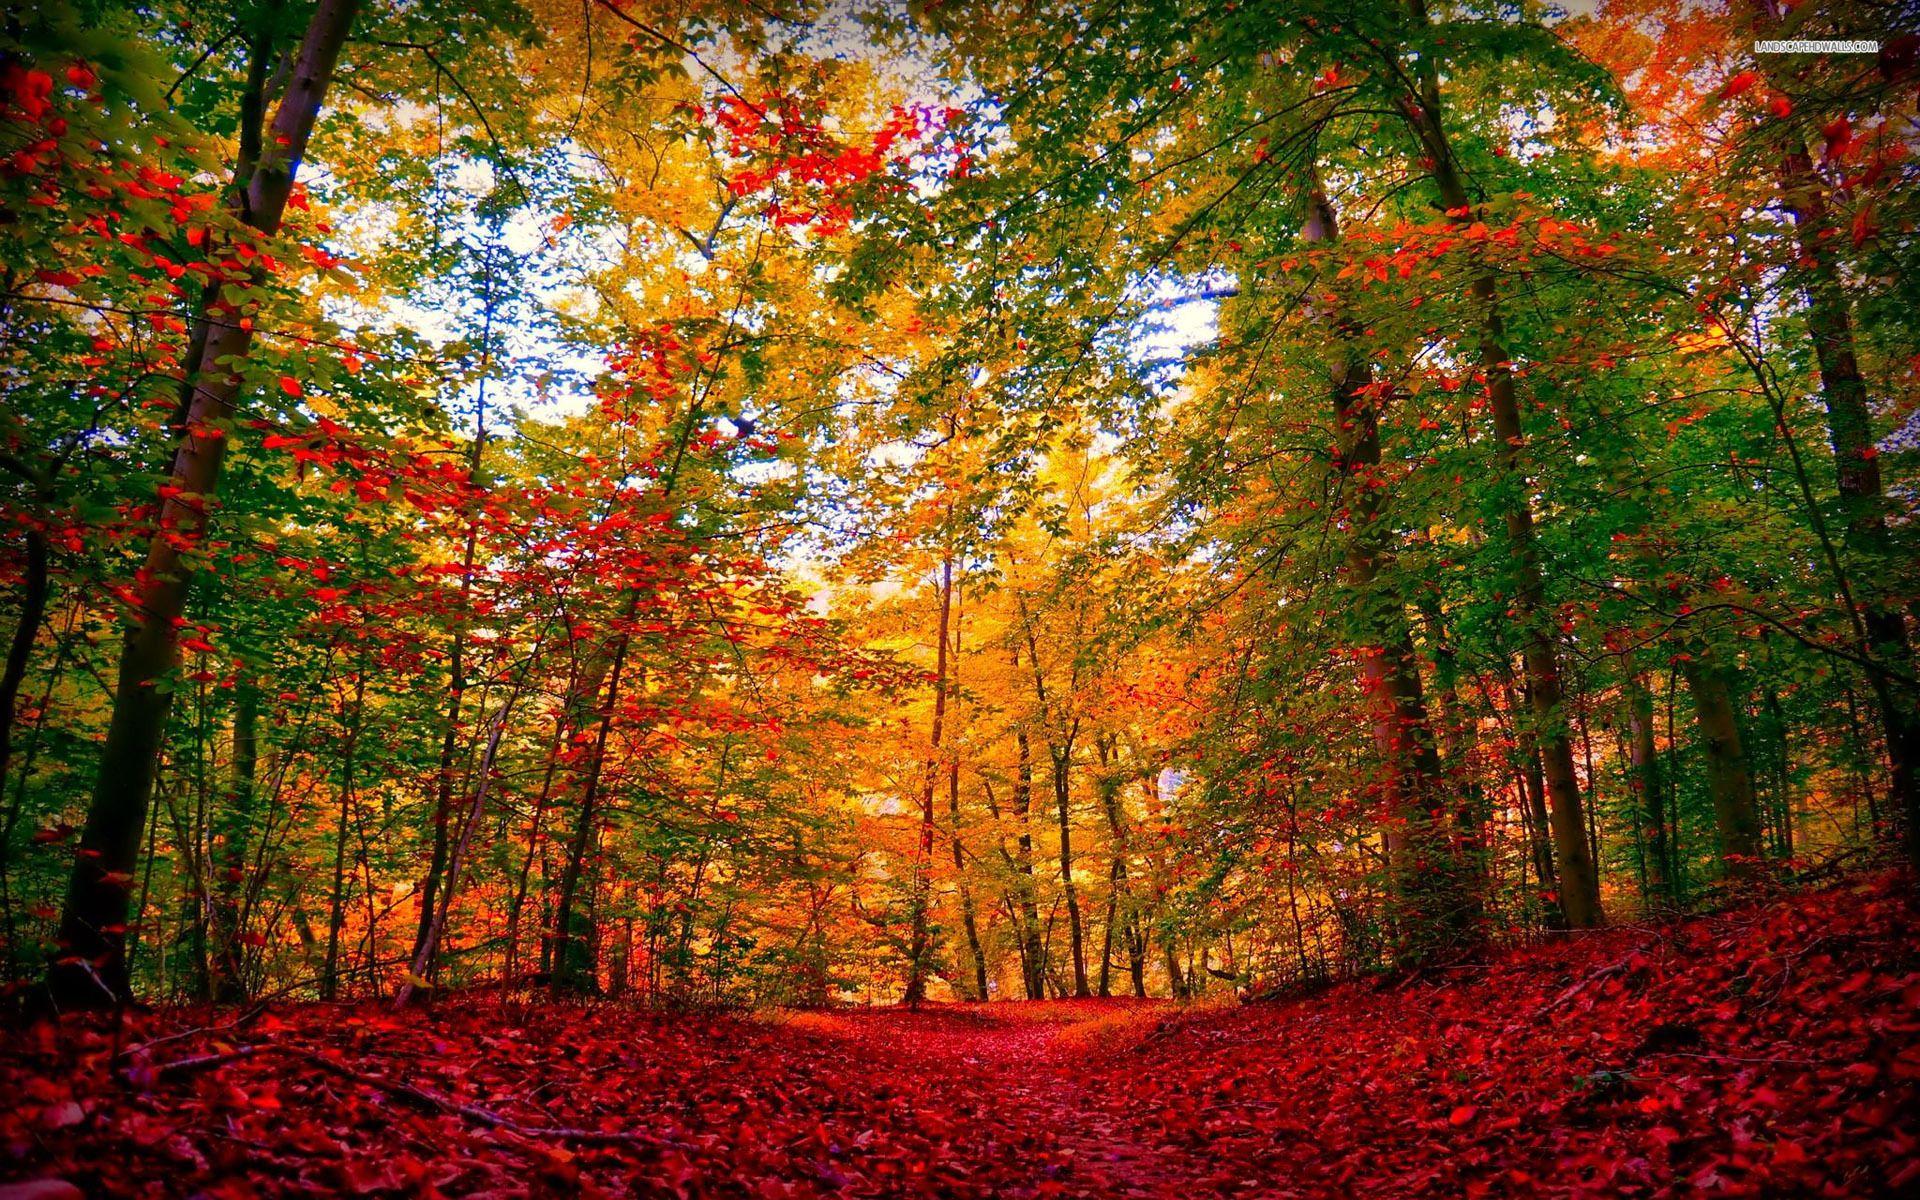 Extra Ordinary Autumn Forest wallpaper. Extra Ordinary Autumn